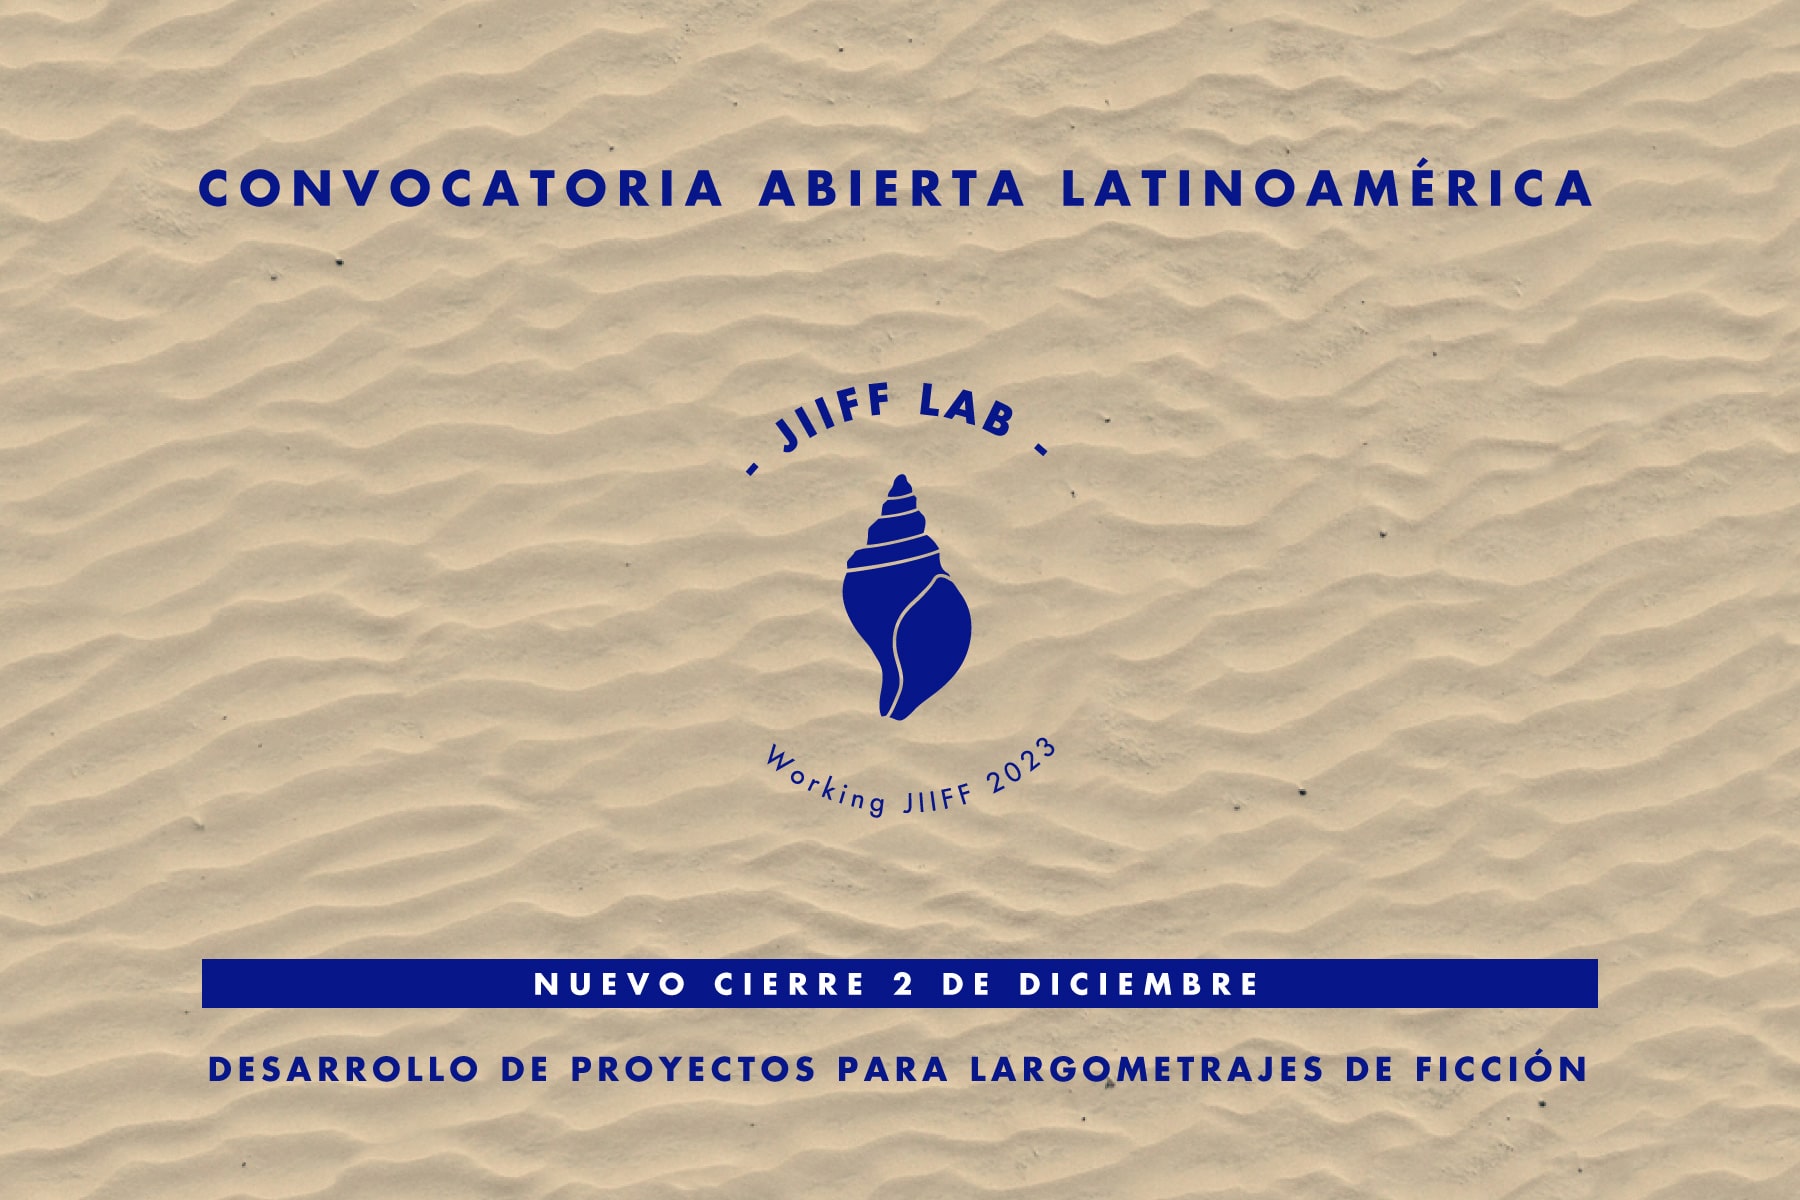 Convocatoria Abierta Latinoamericana JIIFF LAB